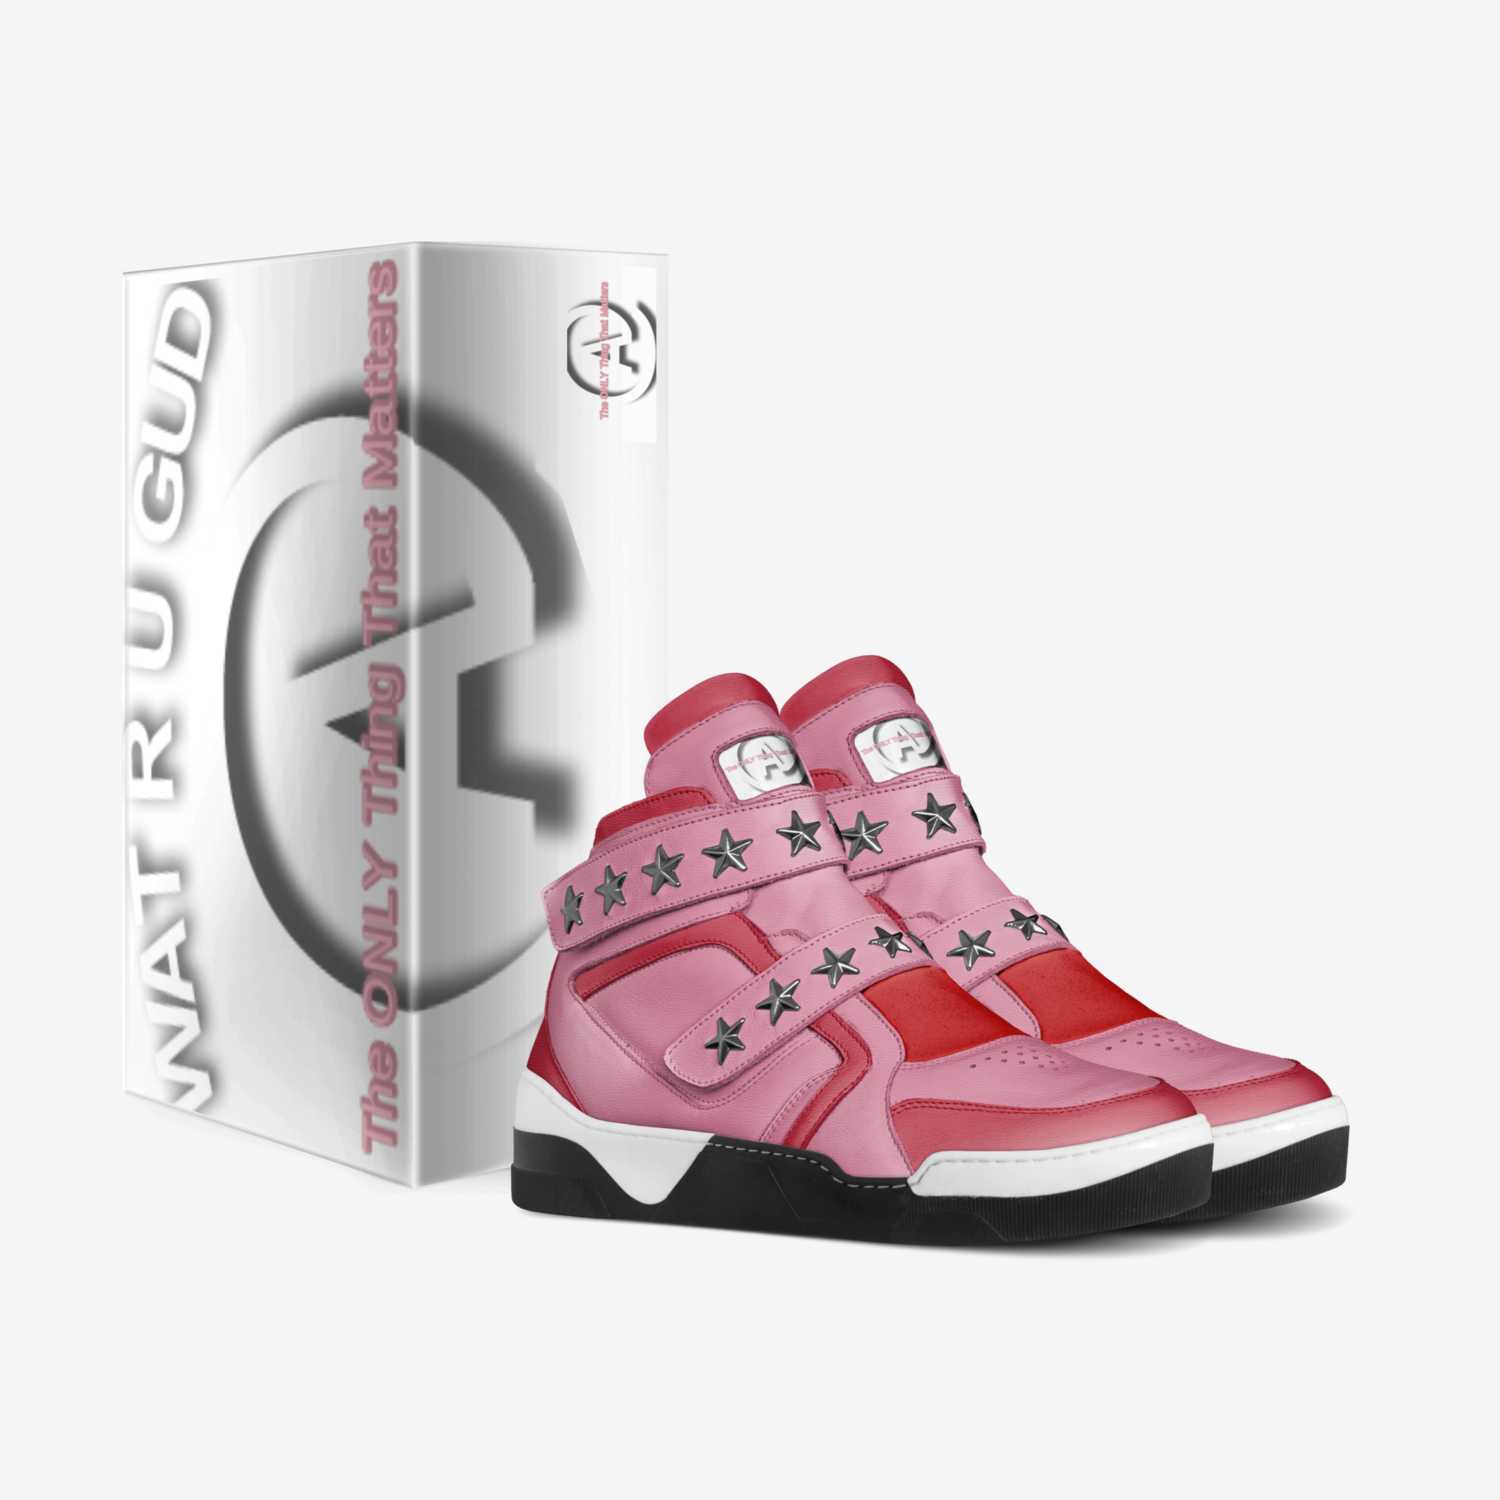 ∆w∆®€π€$T K®Wπ™ custom made in Italy shoes by Dr. Watrugudat | Box view